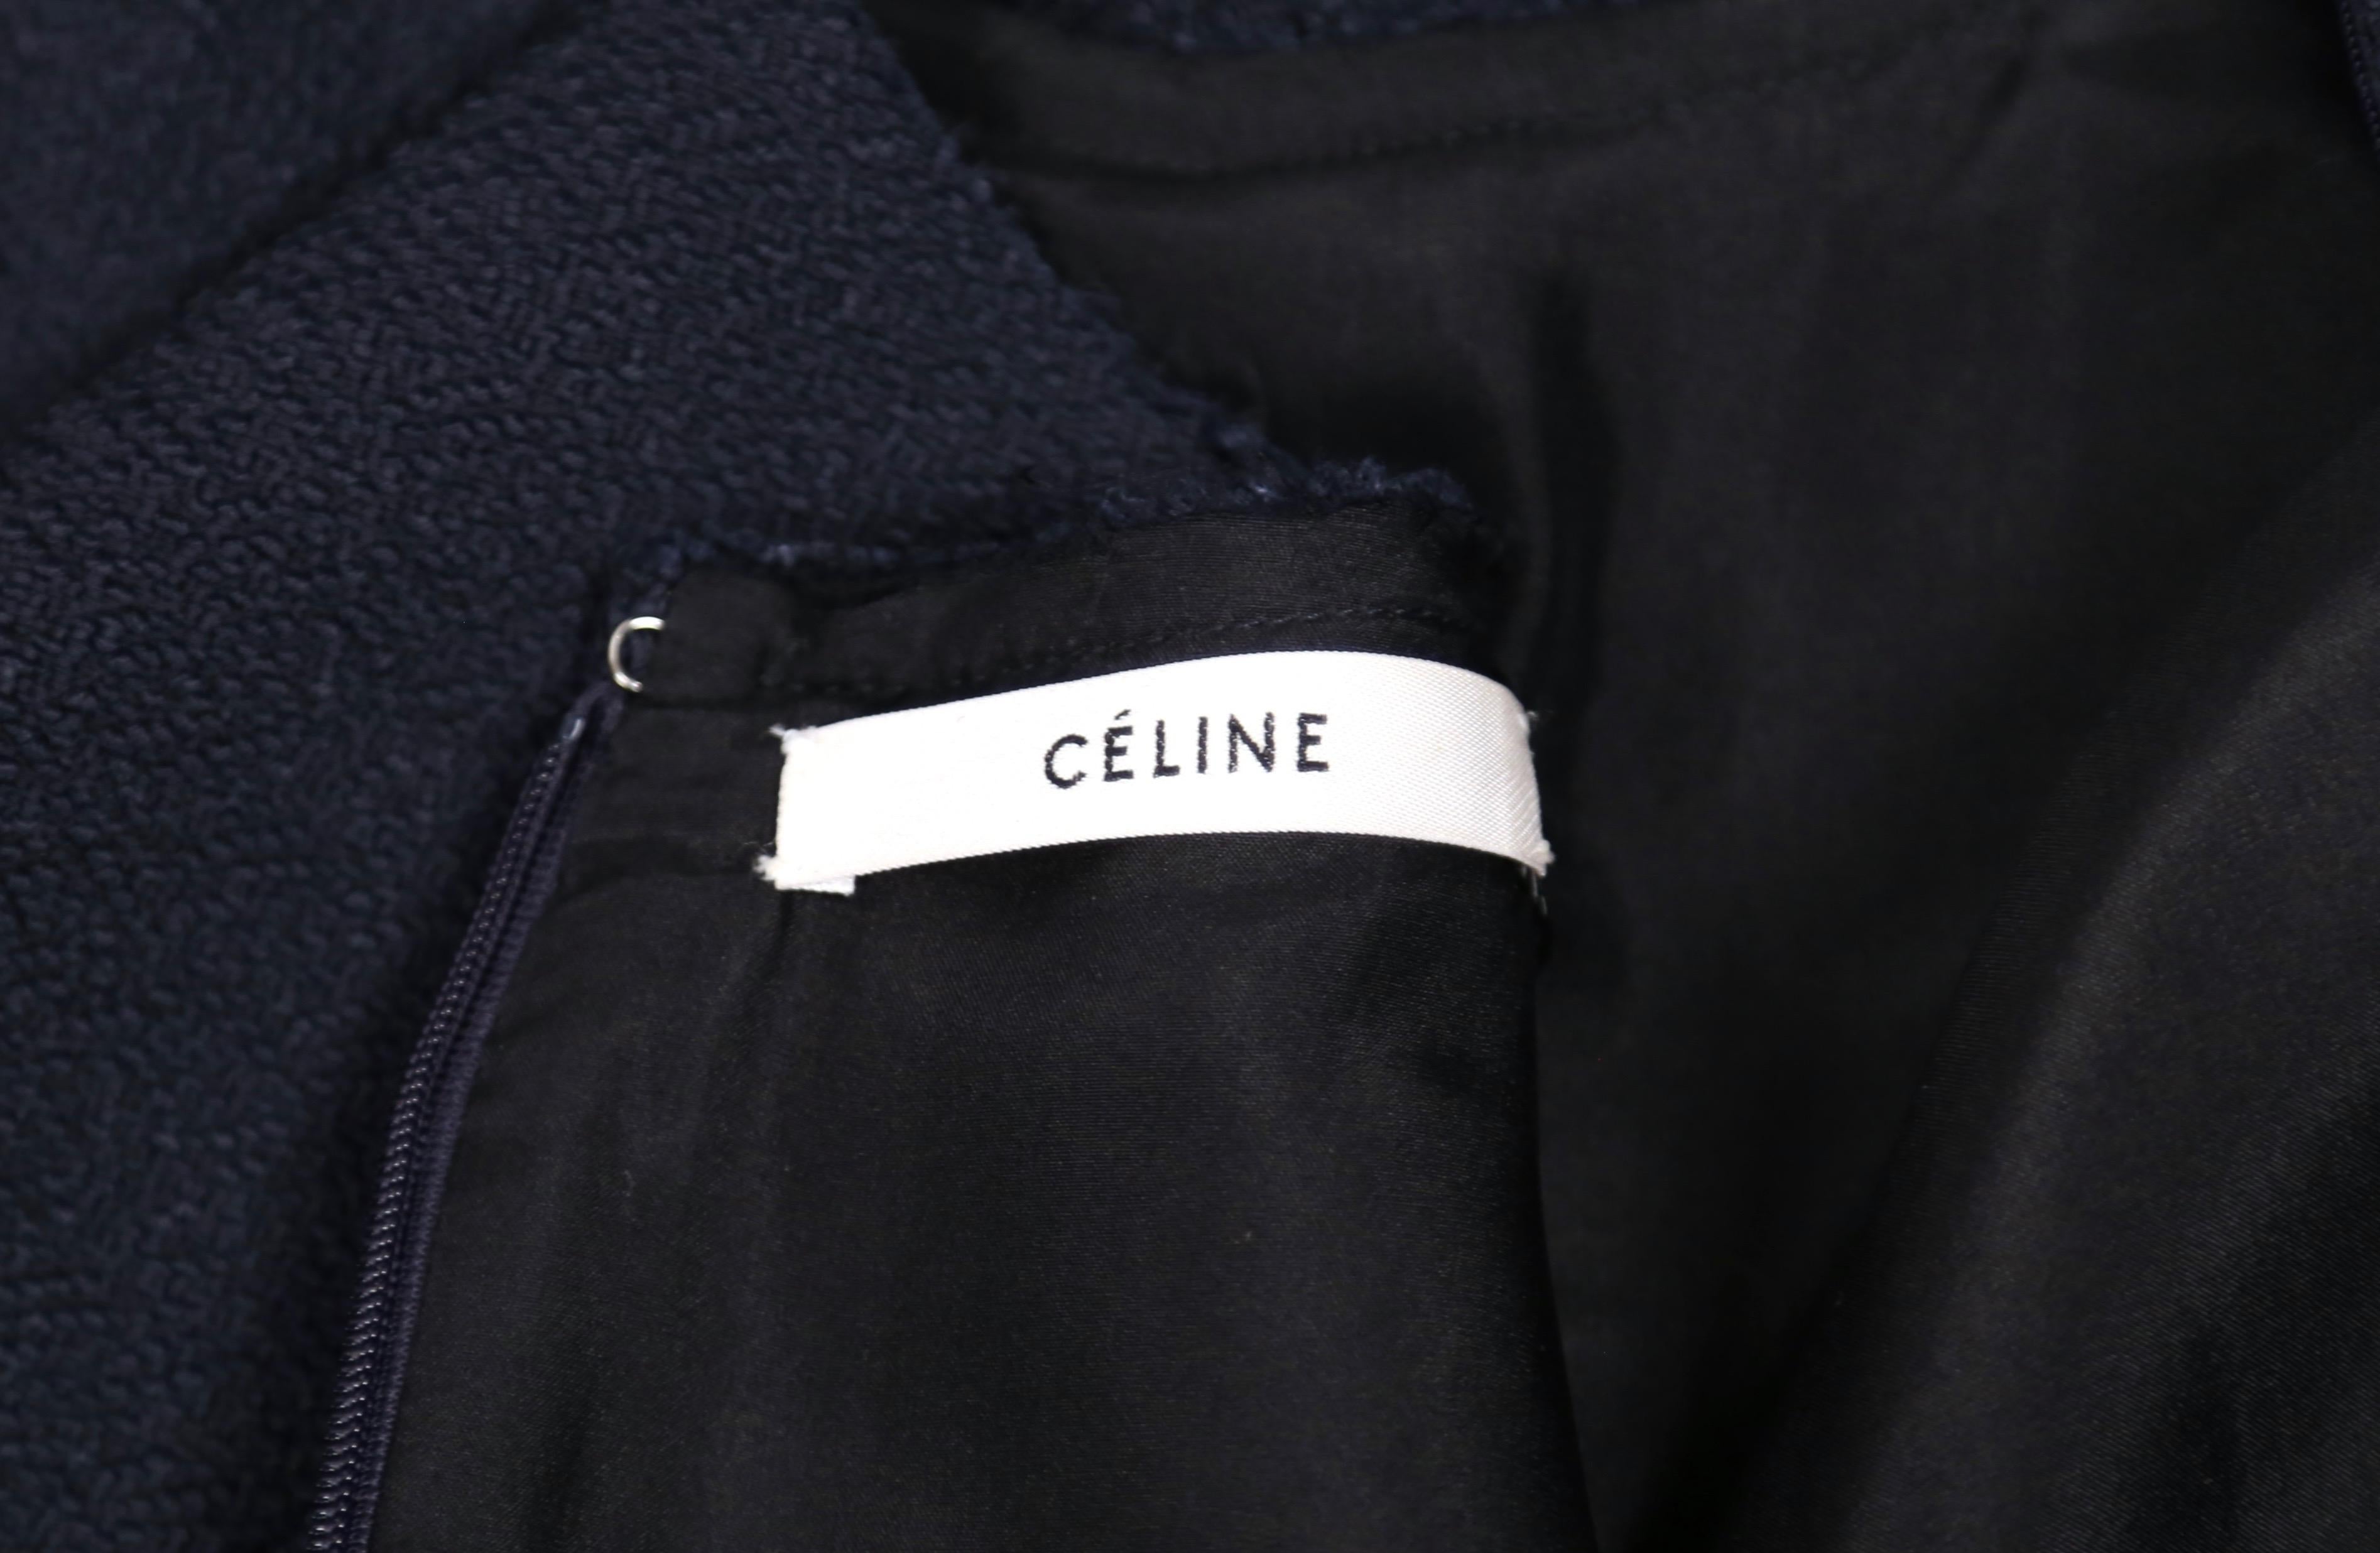 Women's Celine by Phoebe Philo navy runway dress with fringed hemline